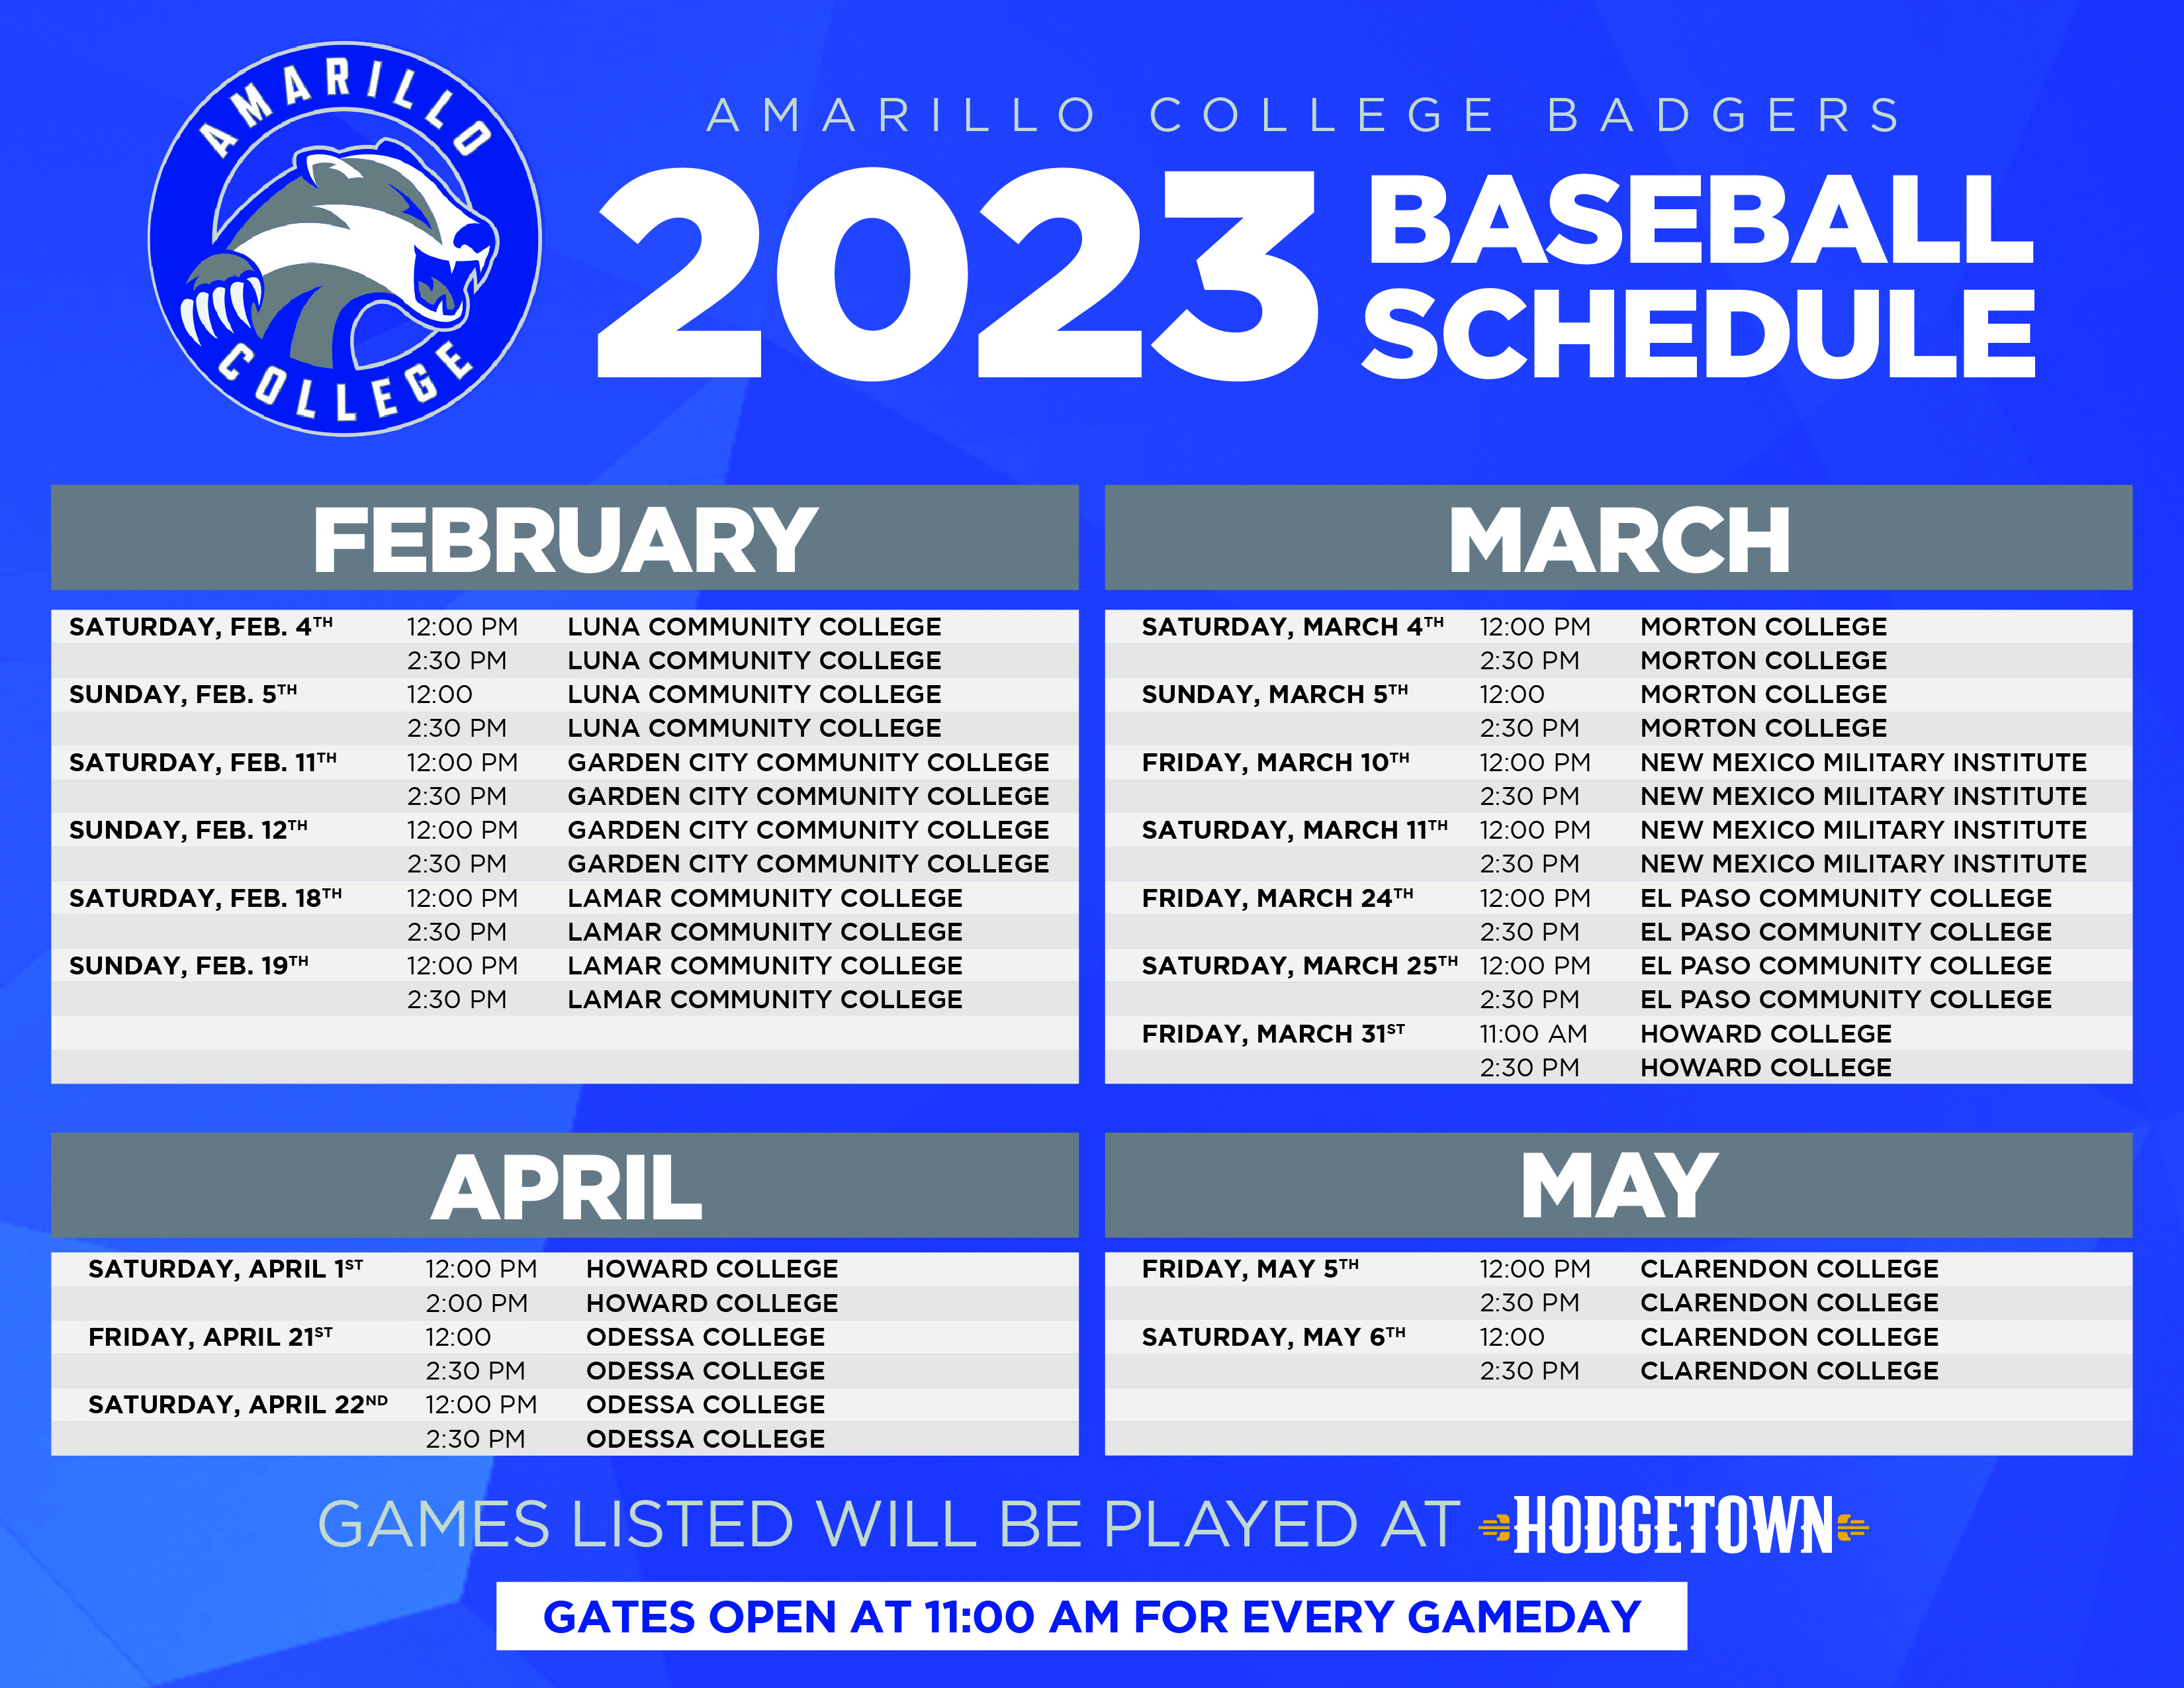 Amarillo College Baseball Tickets On Sale January 16